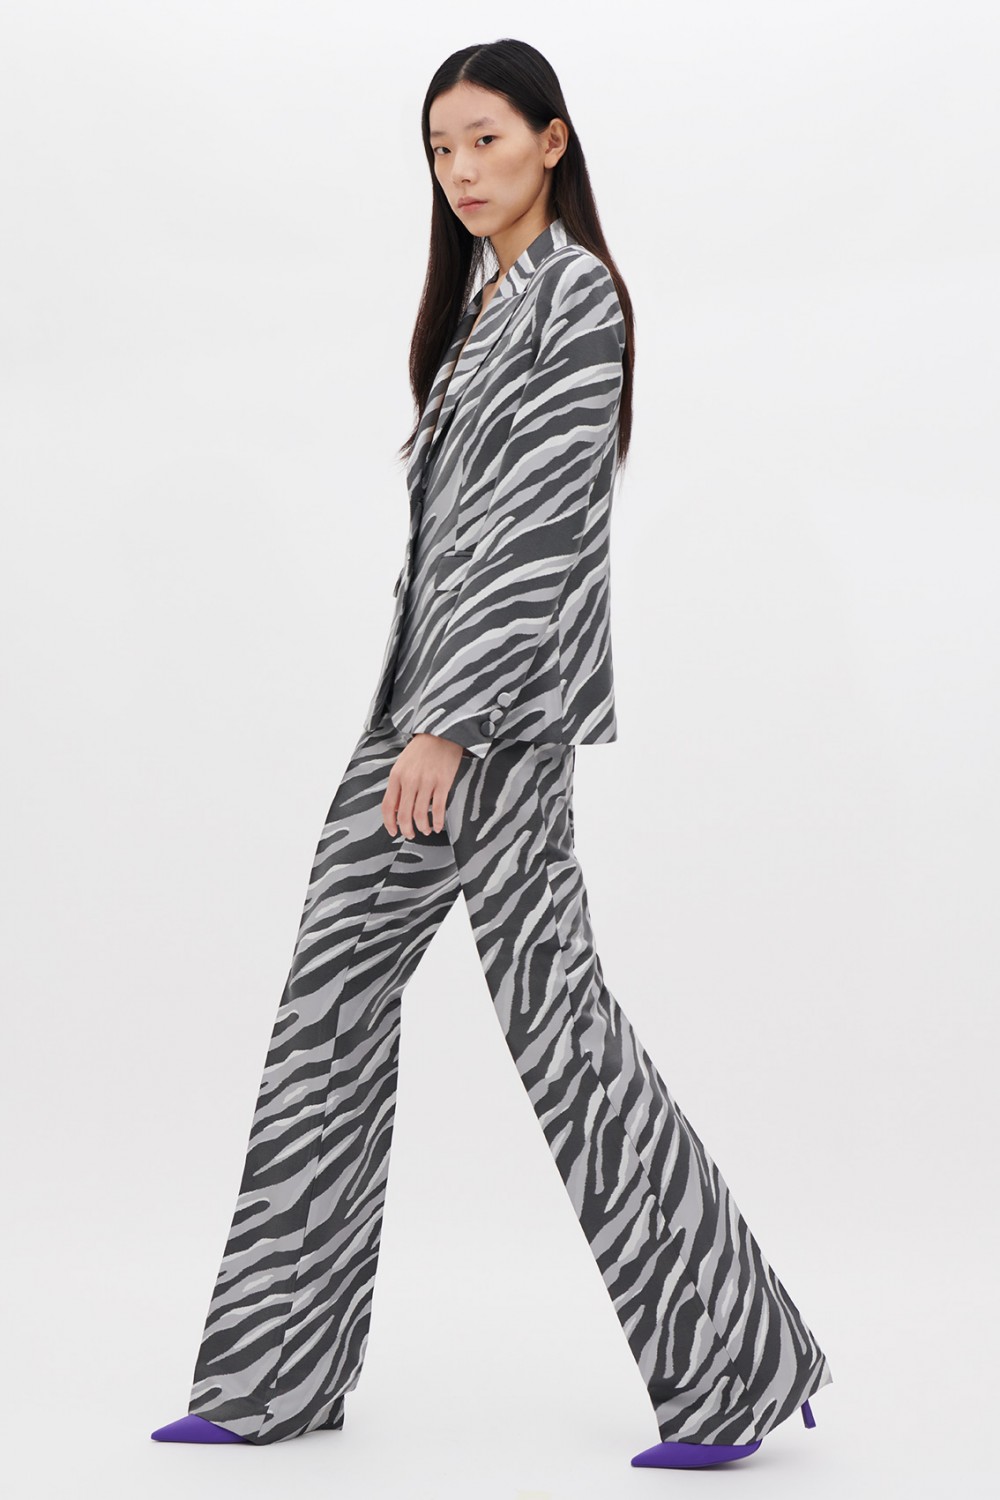 Zebra pantsuit